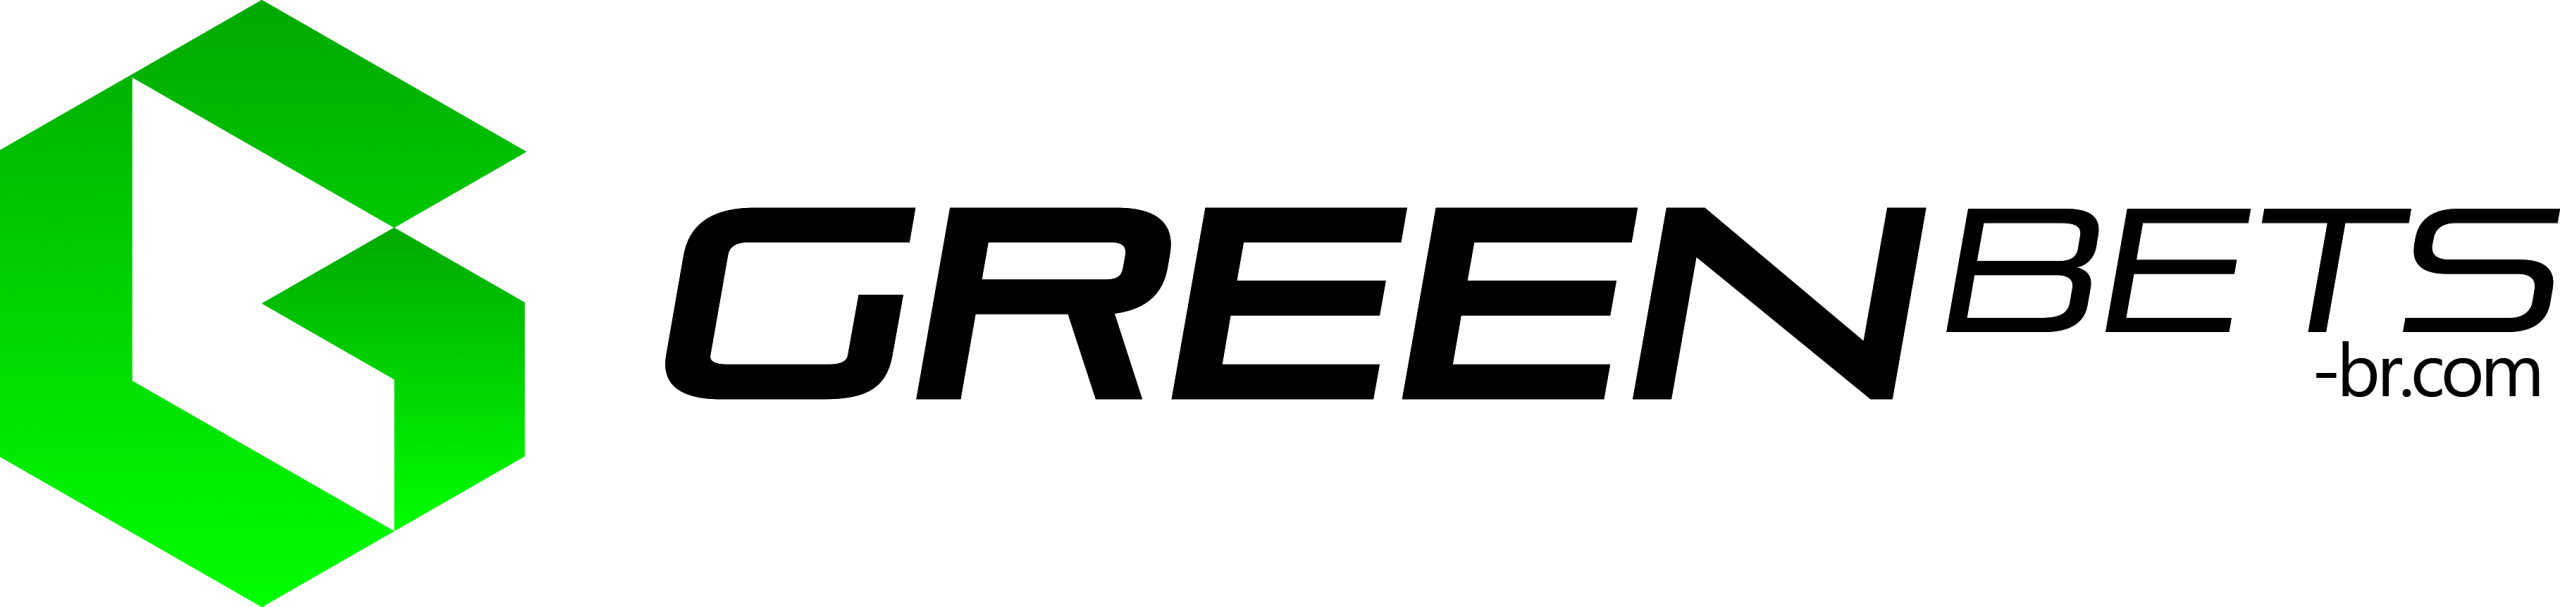 greenbets logo